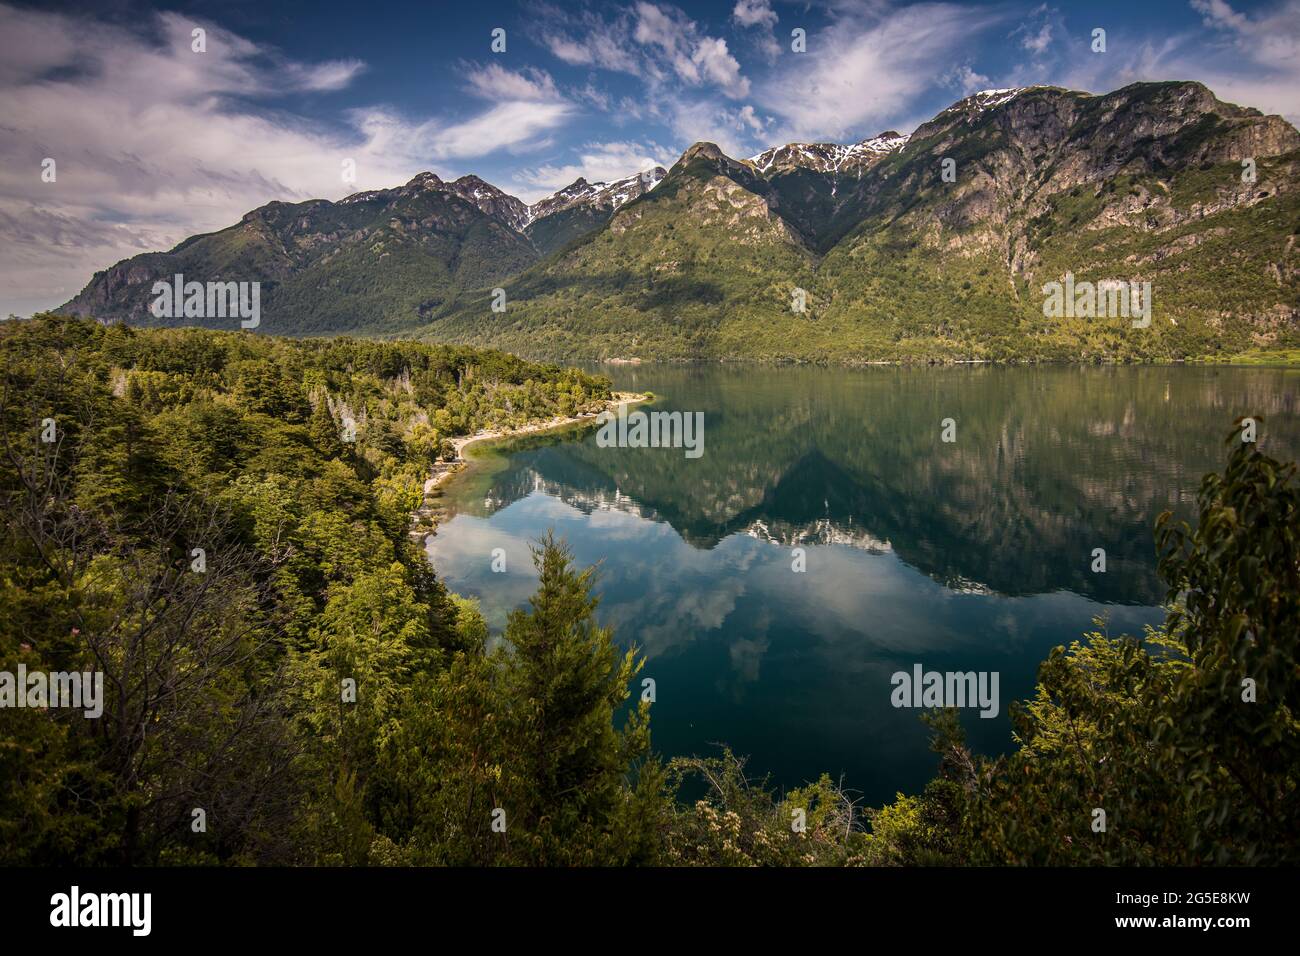 Landscape in Los Alerces National Park, Chubut Province, Argentina. Lake Futalaufquen mirrors the mountains. Stock Photo